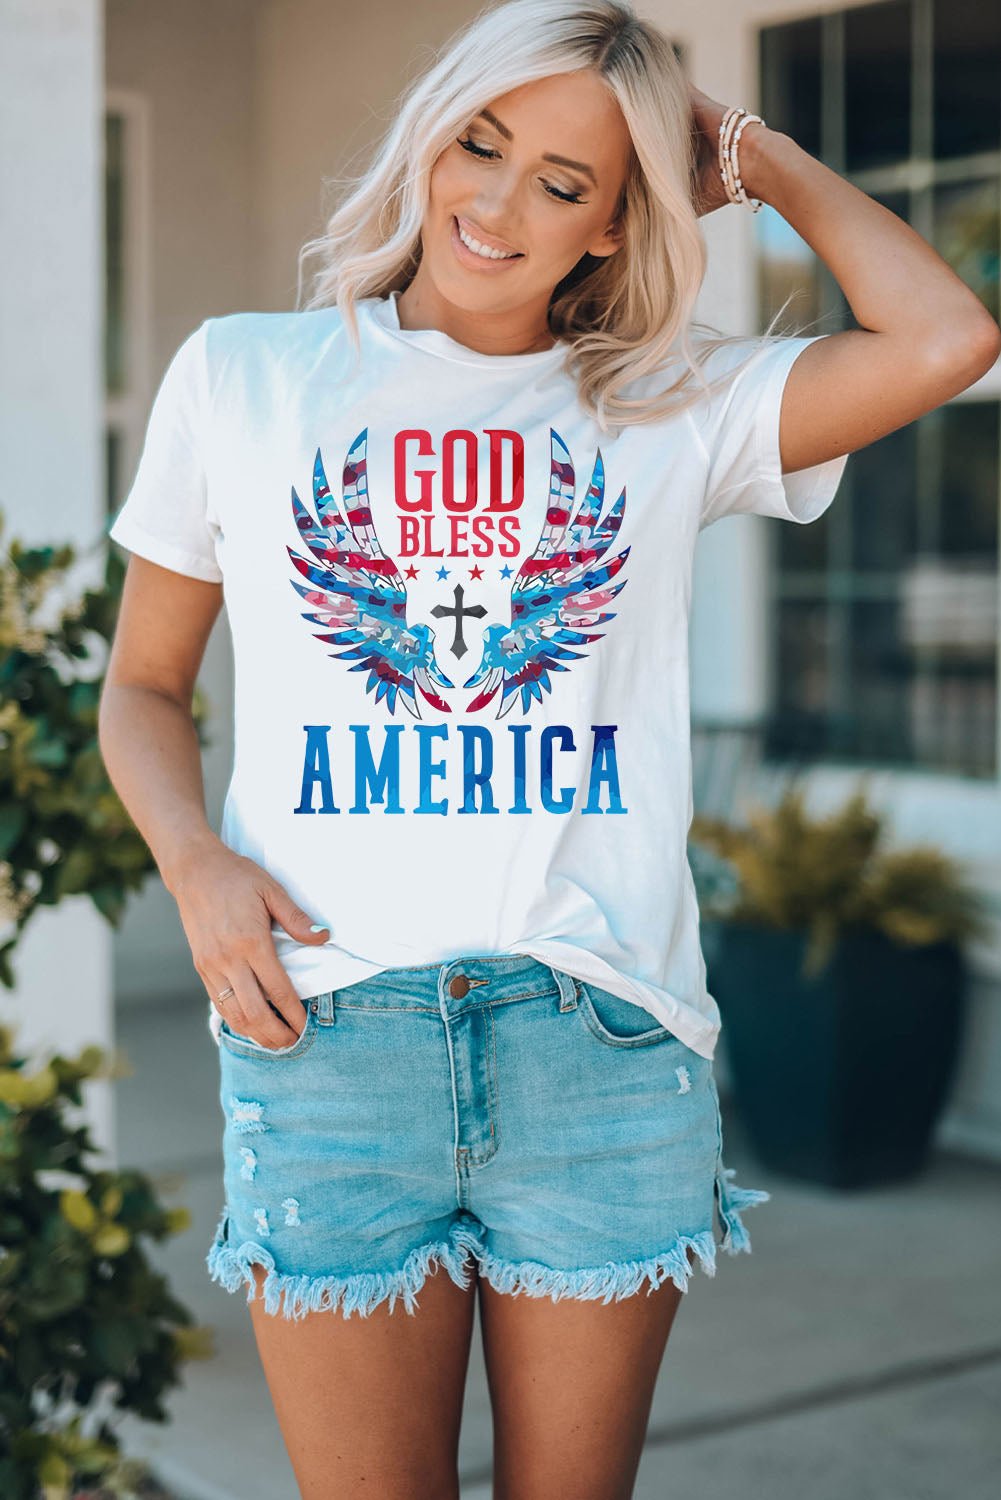 GOD BLESS AMERICA Cuffed Tee Shirt - OMG! Rose